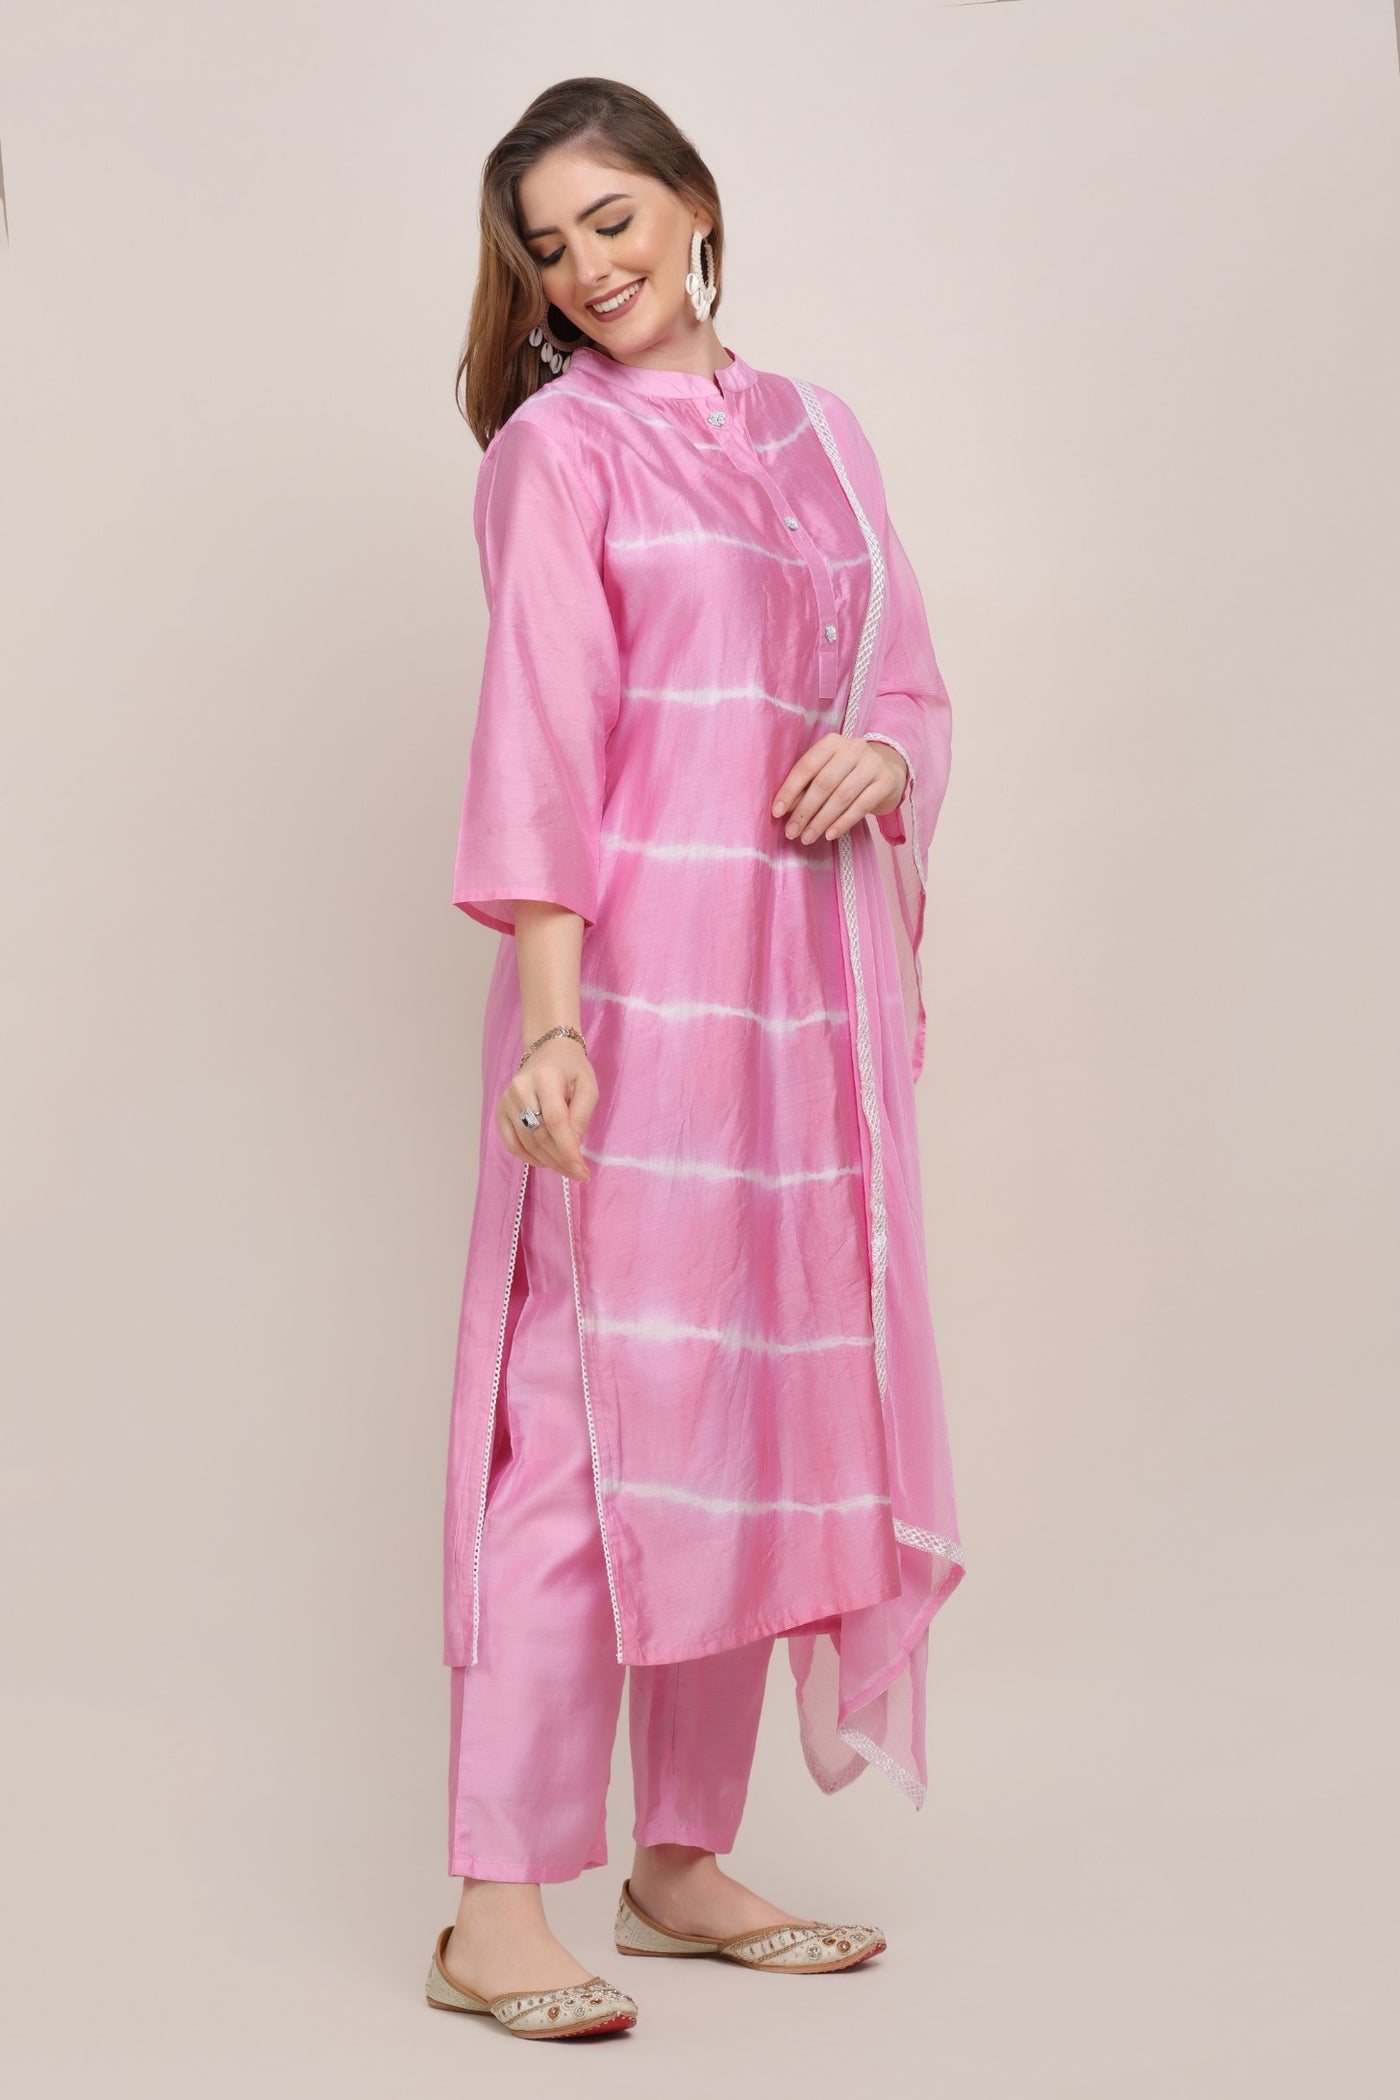 model posing wearing tie and dyed kurti